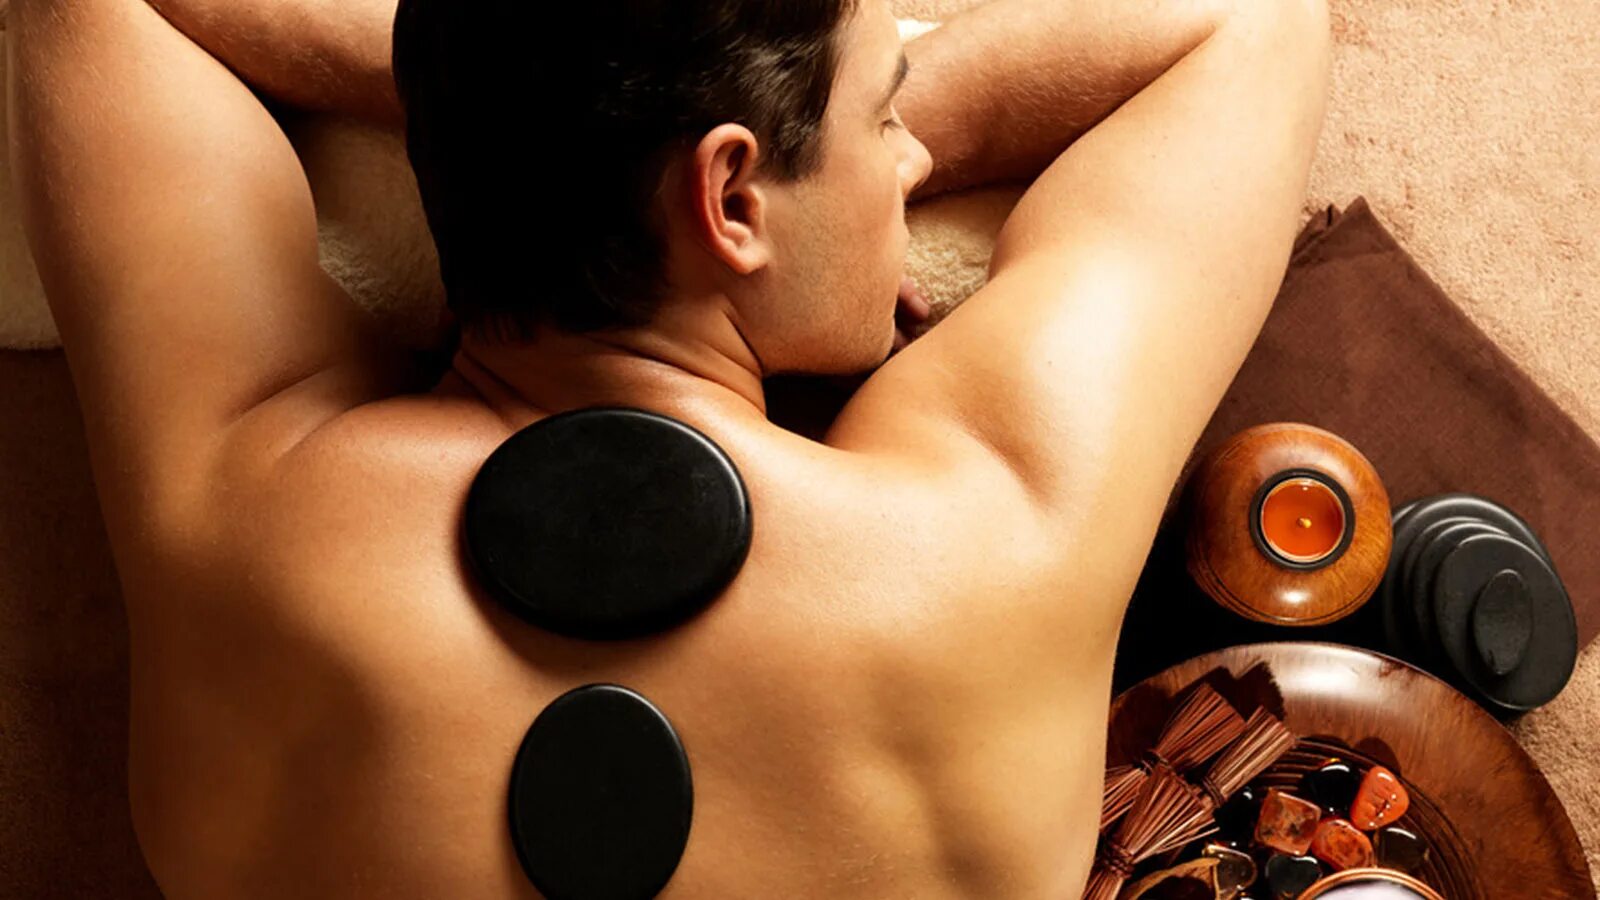 Markus massage. Стоунтерапия мужчина. Стоун массаж мужчине. Спа для мужчин. Спа процедуры для мужчин.